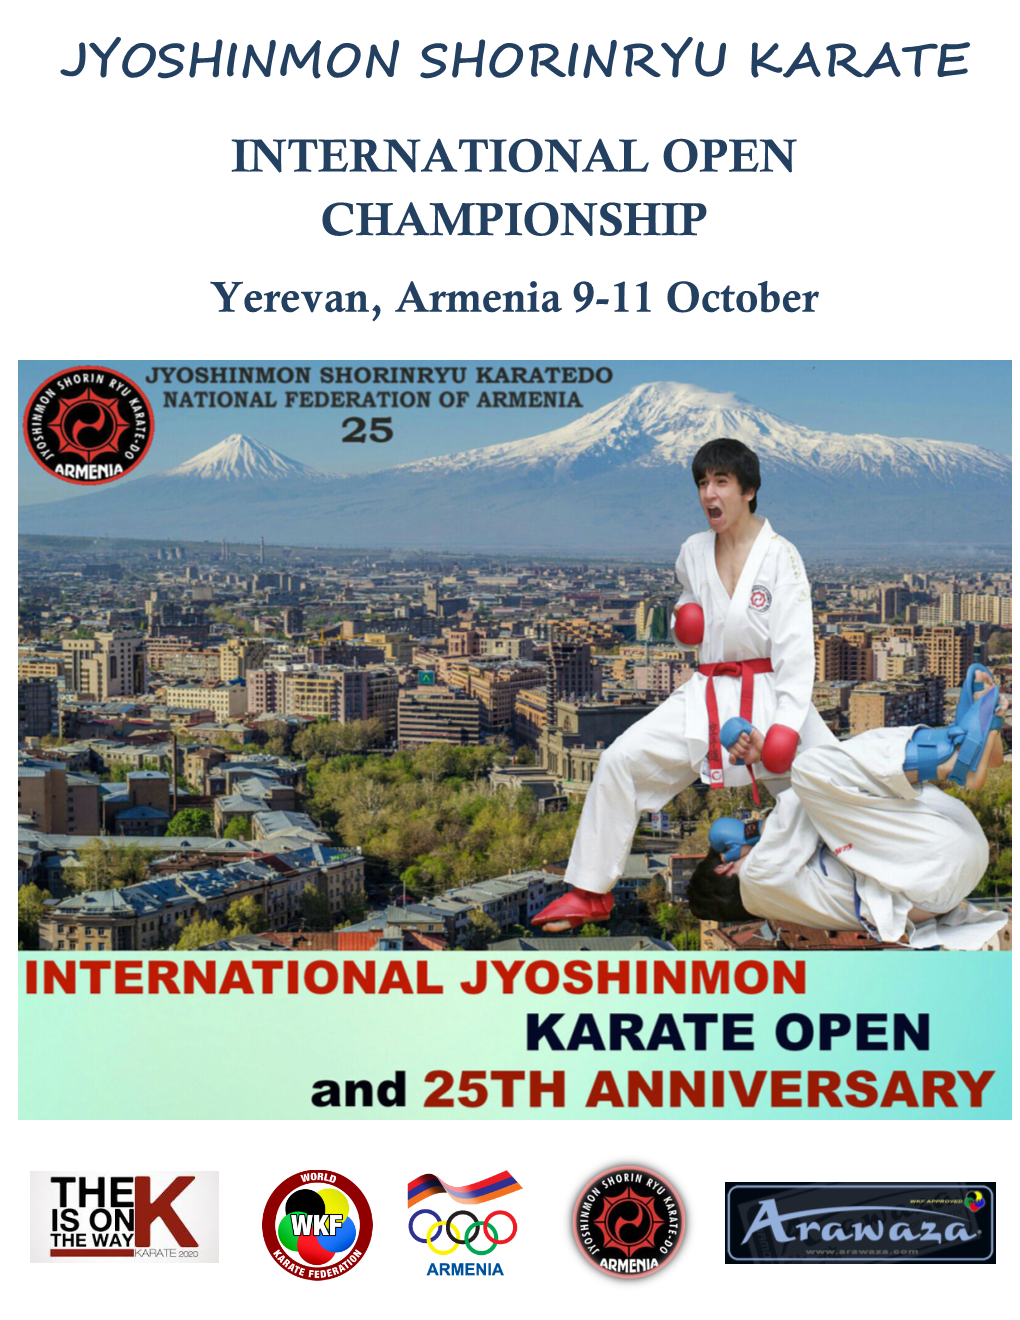 JYOSHINMON SHORINRYU KARATE INTERNATIONAL OPEN CHAMPIONSHIP Yerevan, Armenia 9-11 October